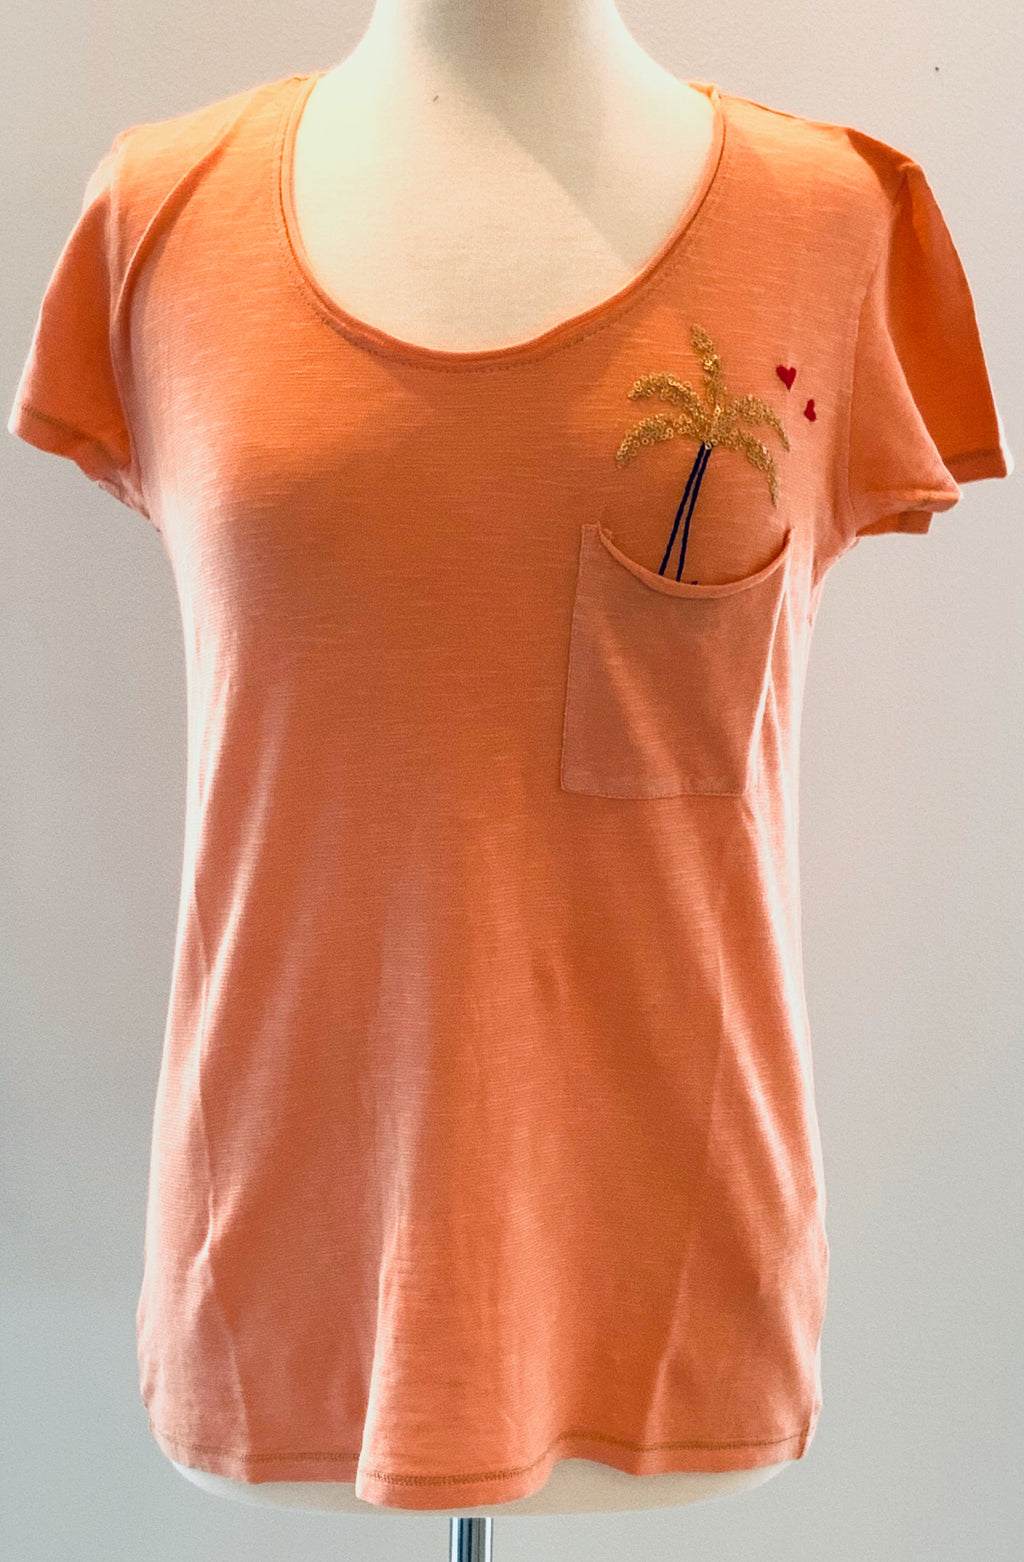 Tee Shirt W/Palm Tree Design